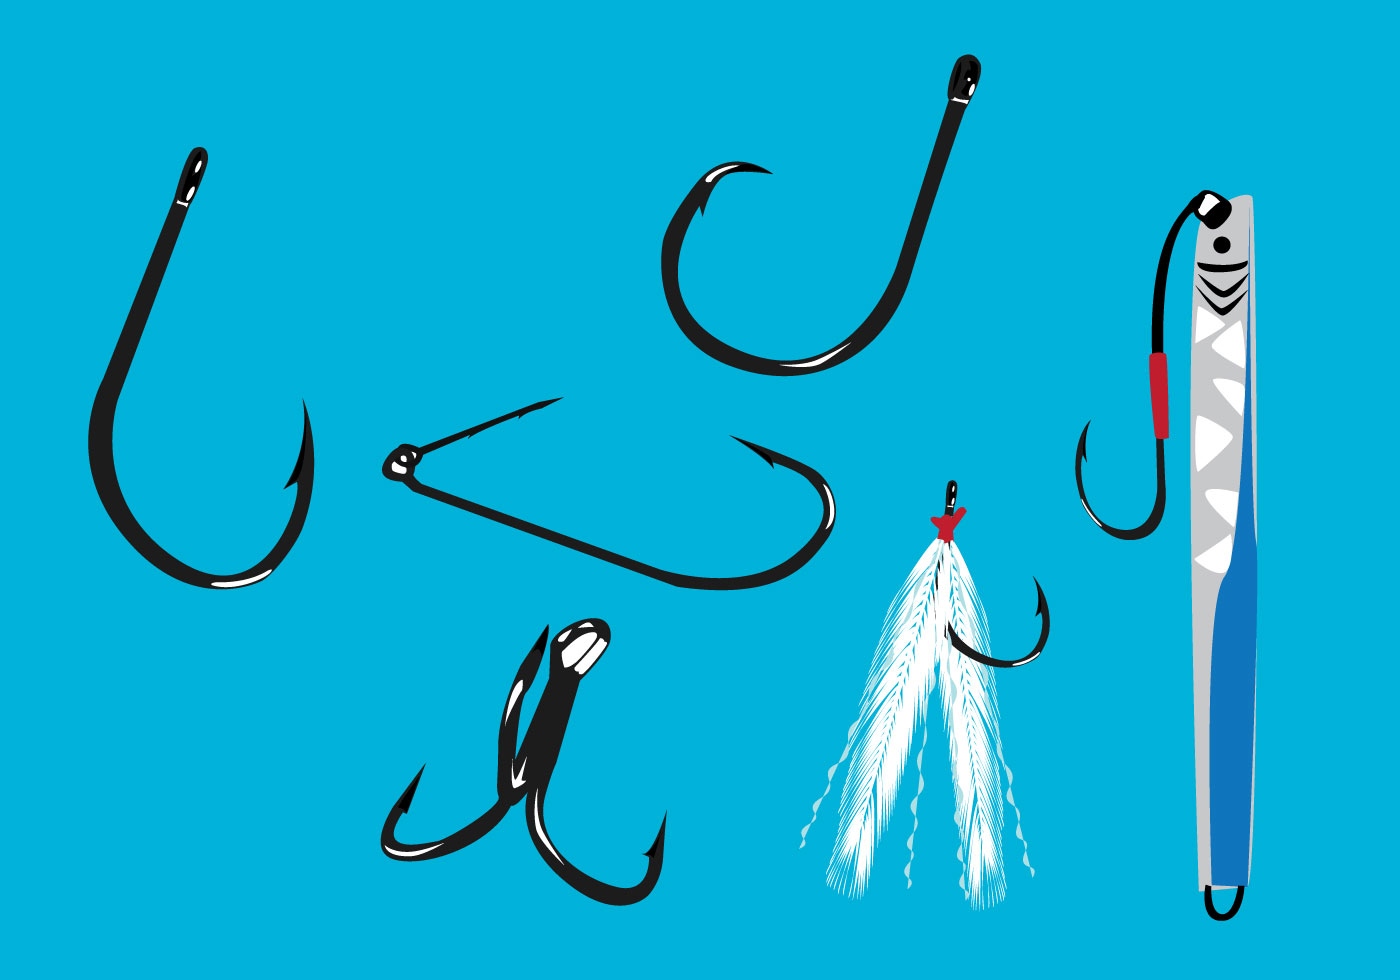 Fishing Hook Vector Illustration - Download Free Vector Art, Stock